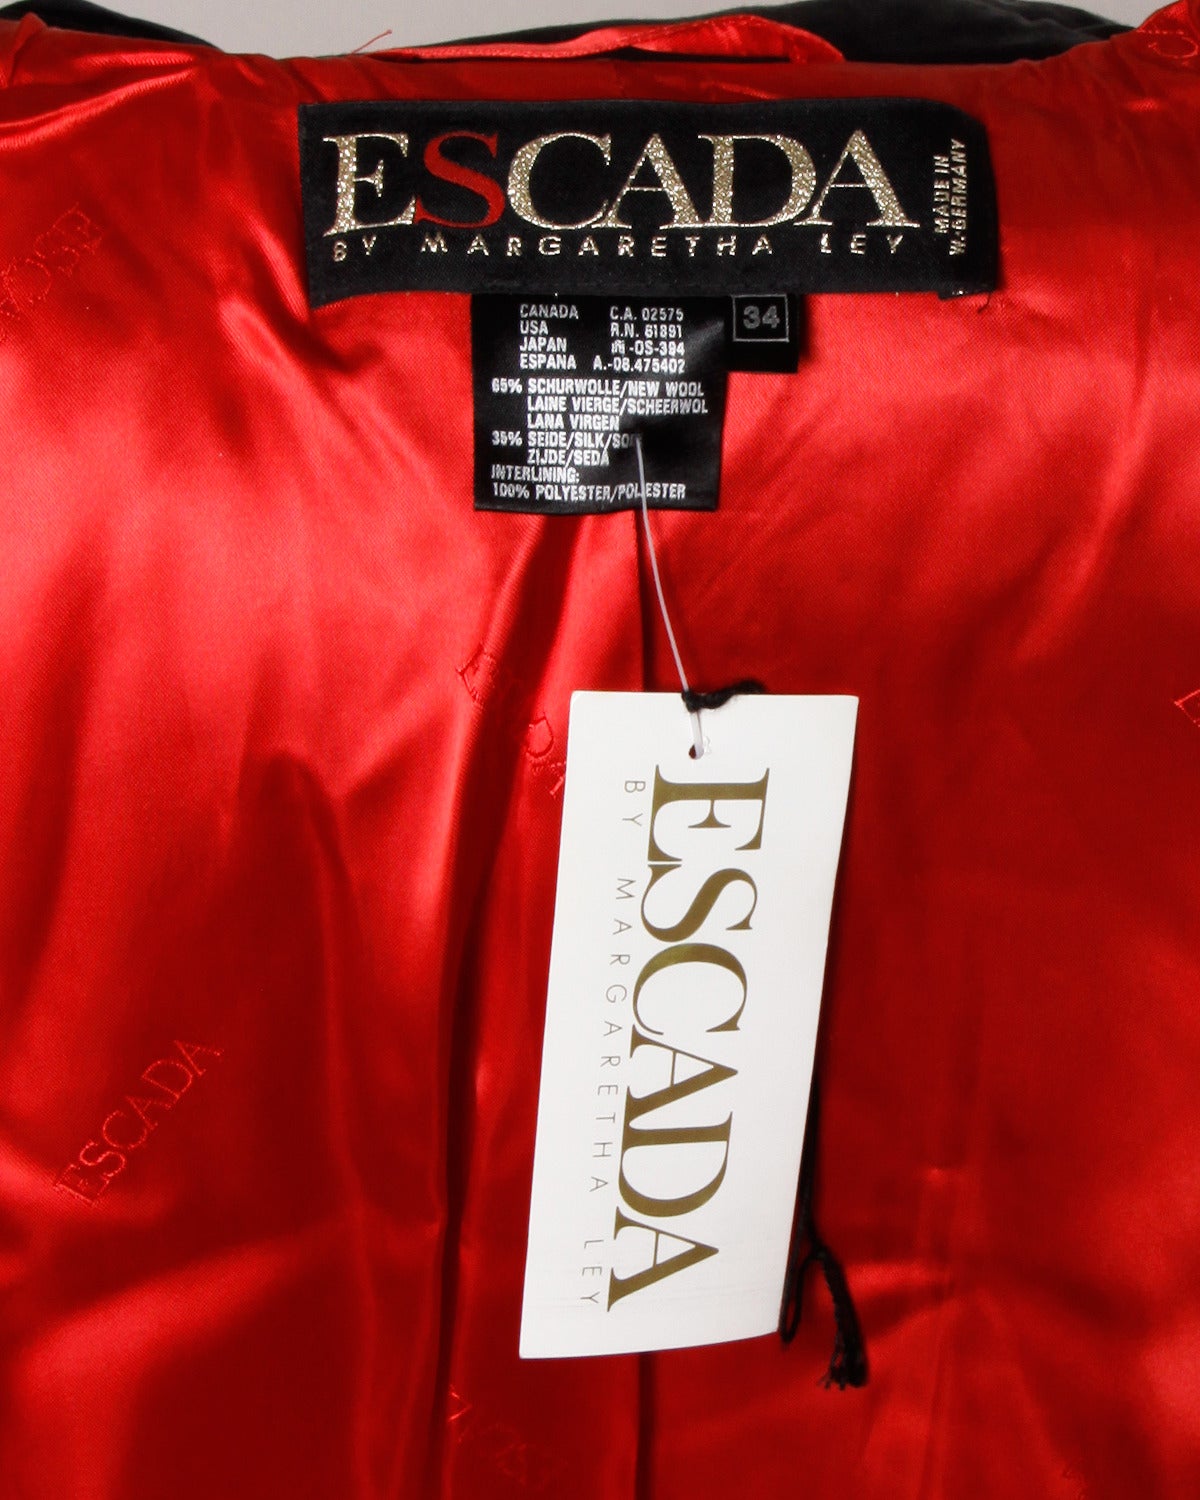 Unworn Escada Vintage 1980s Quilted Bomber Jacket with Original Tags 5